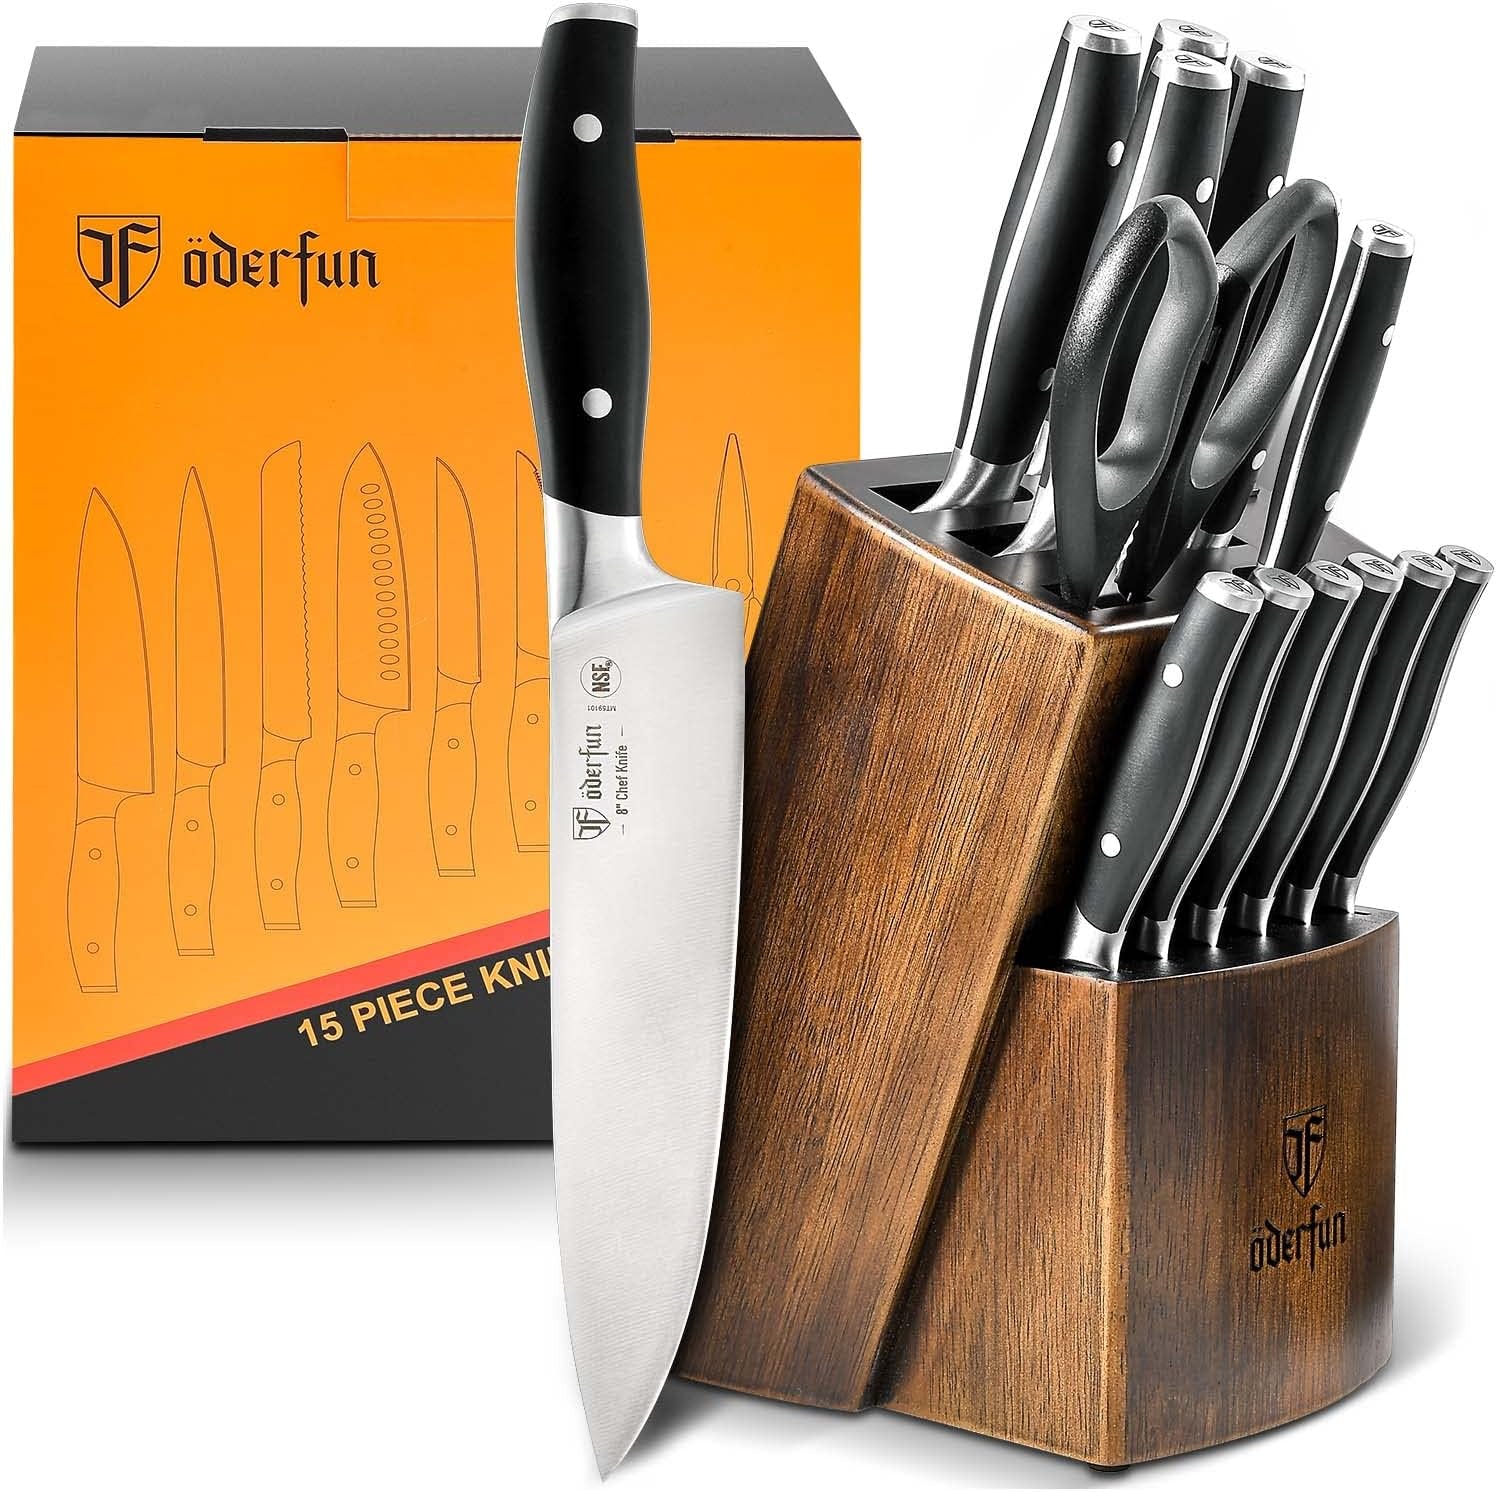 Brewin Knife Set, 15-Piece Kitchen Knife Set with Block, German